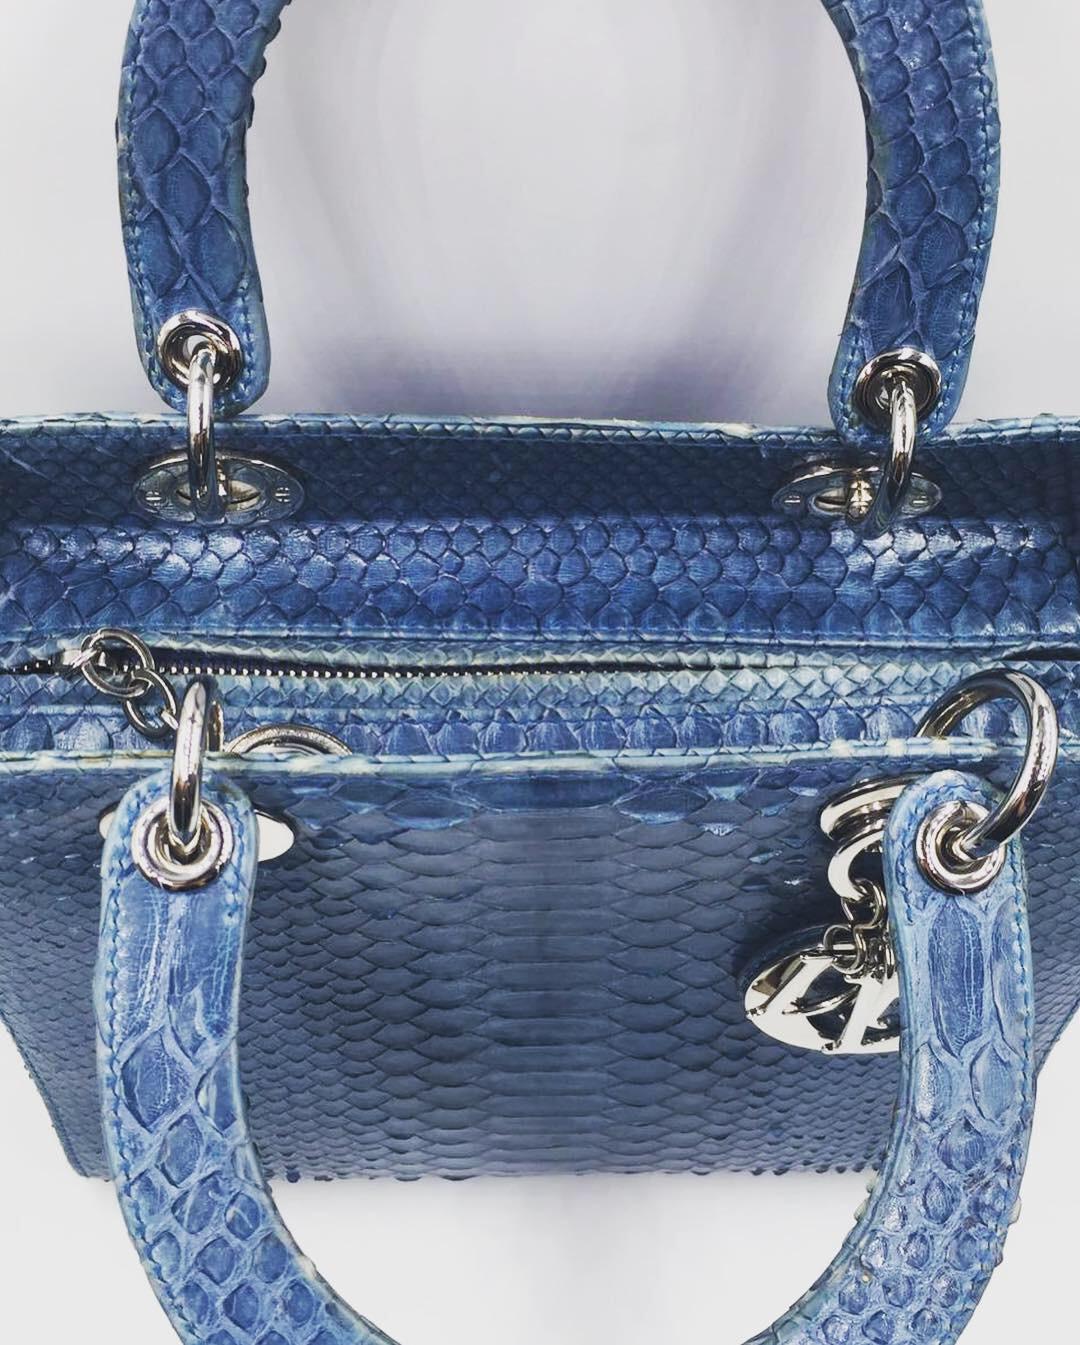 Blue Python Haute Maroquinerie Large Lady Dior Tote Bag.
Medium size.